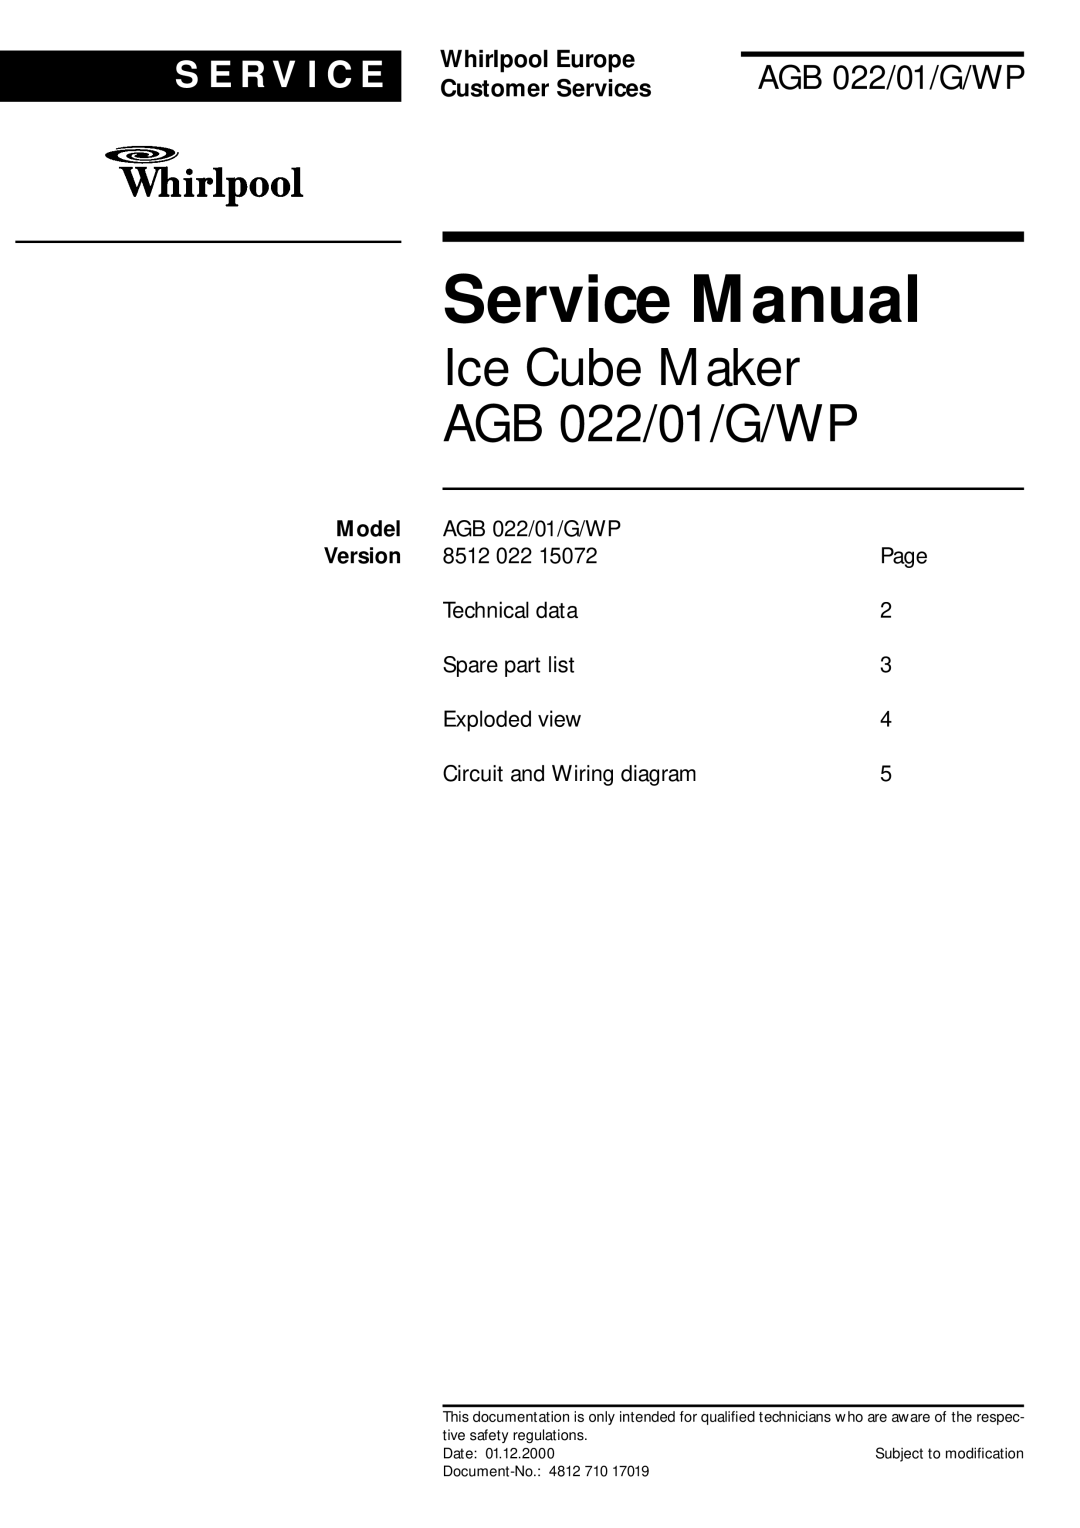 Whirlpool lx, AKG 644 1 service manual Model, Built-inoven AKG 644/01, S E R V I C E, Whirlpool Europe, Customer Services 